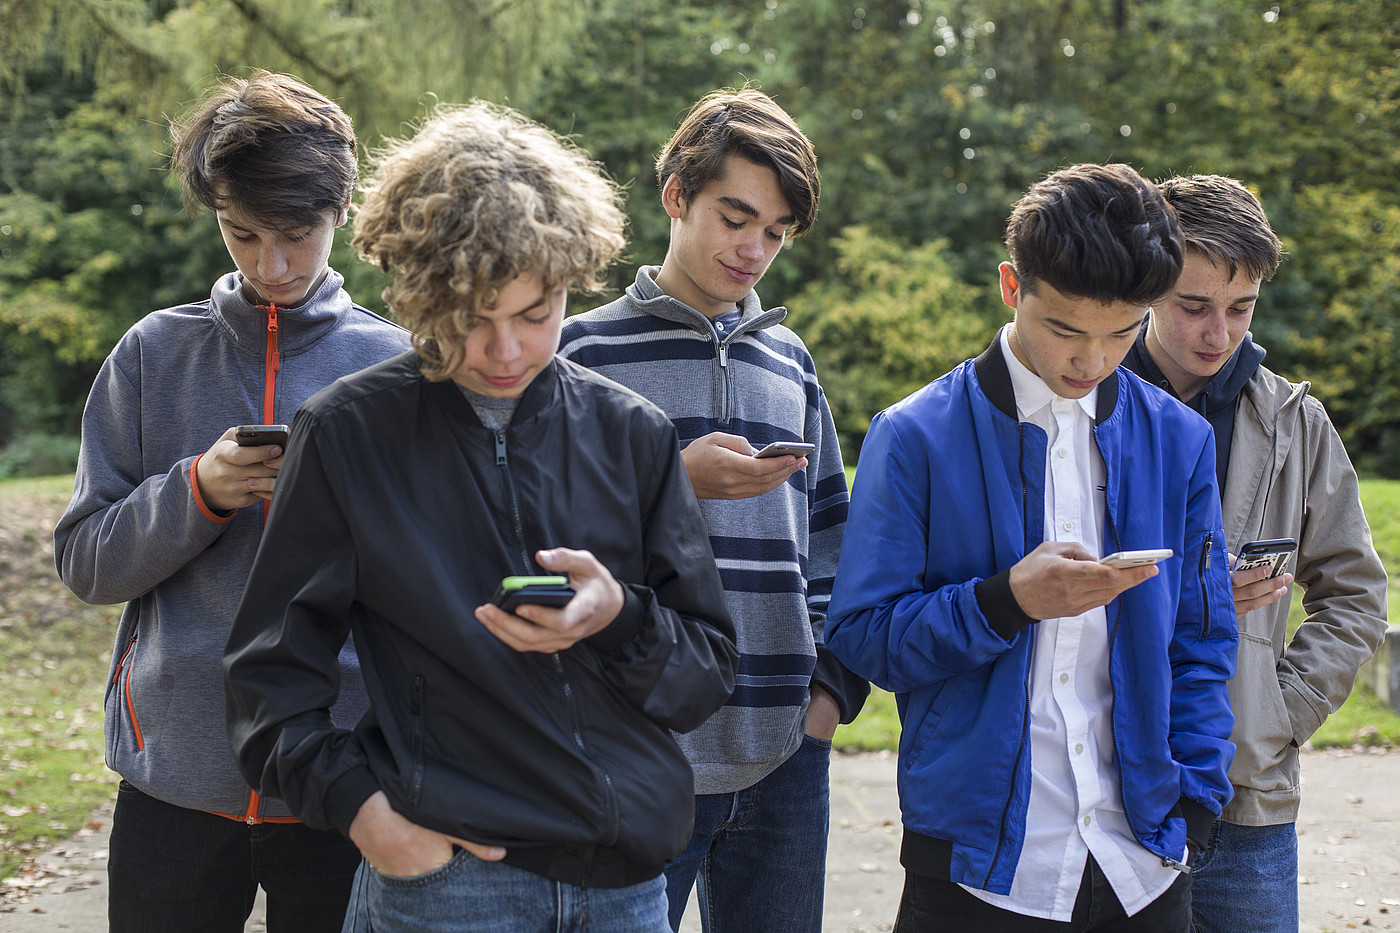 Cinq adolescents se tenant dehors et regardant tous leurs smartphones.